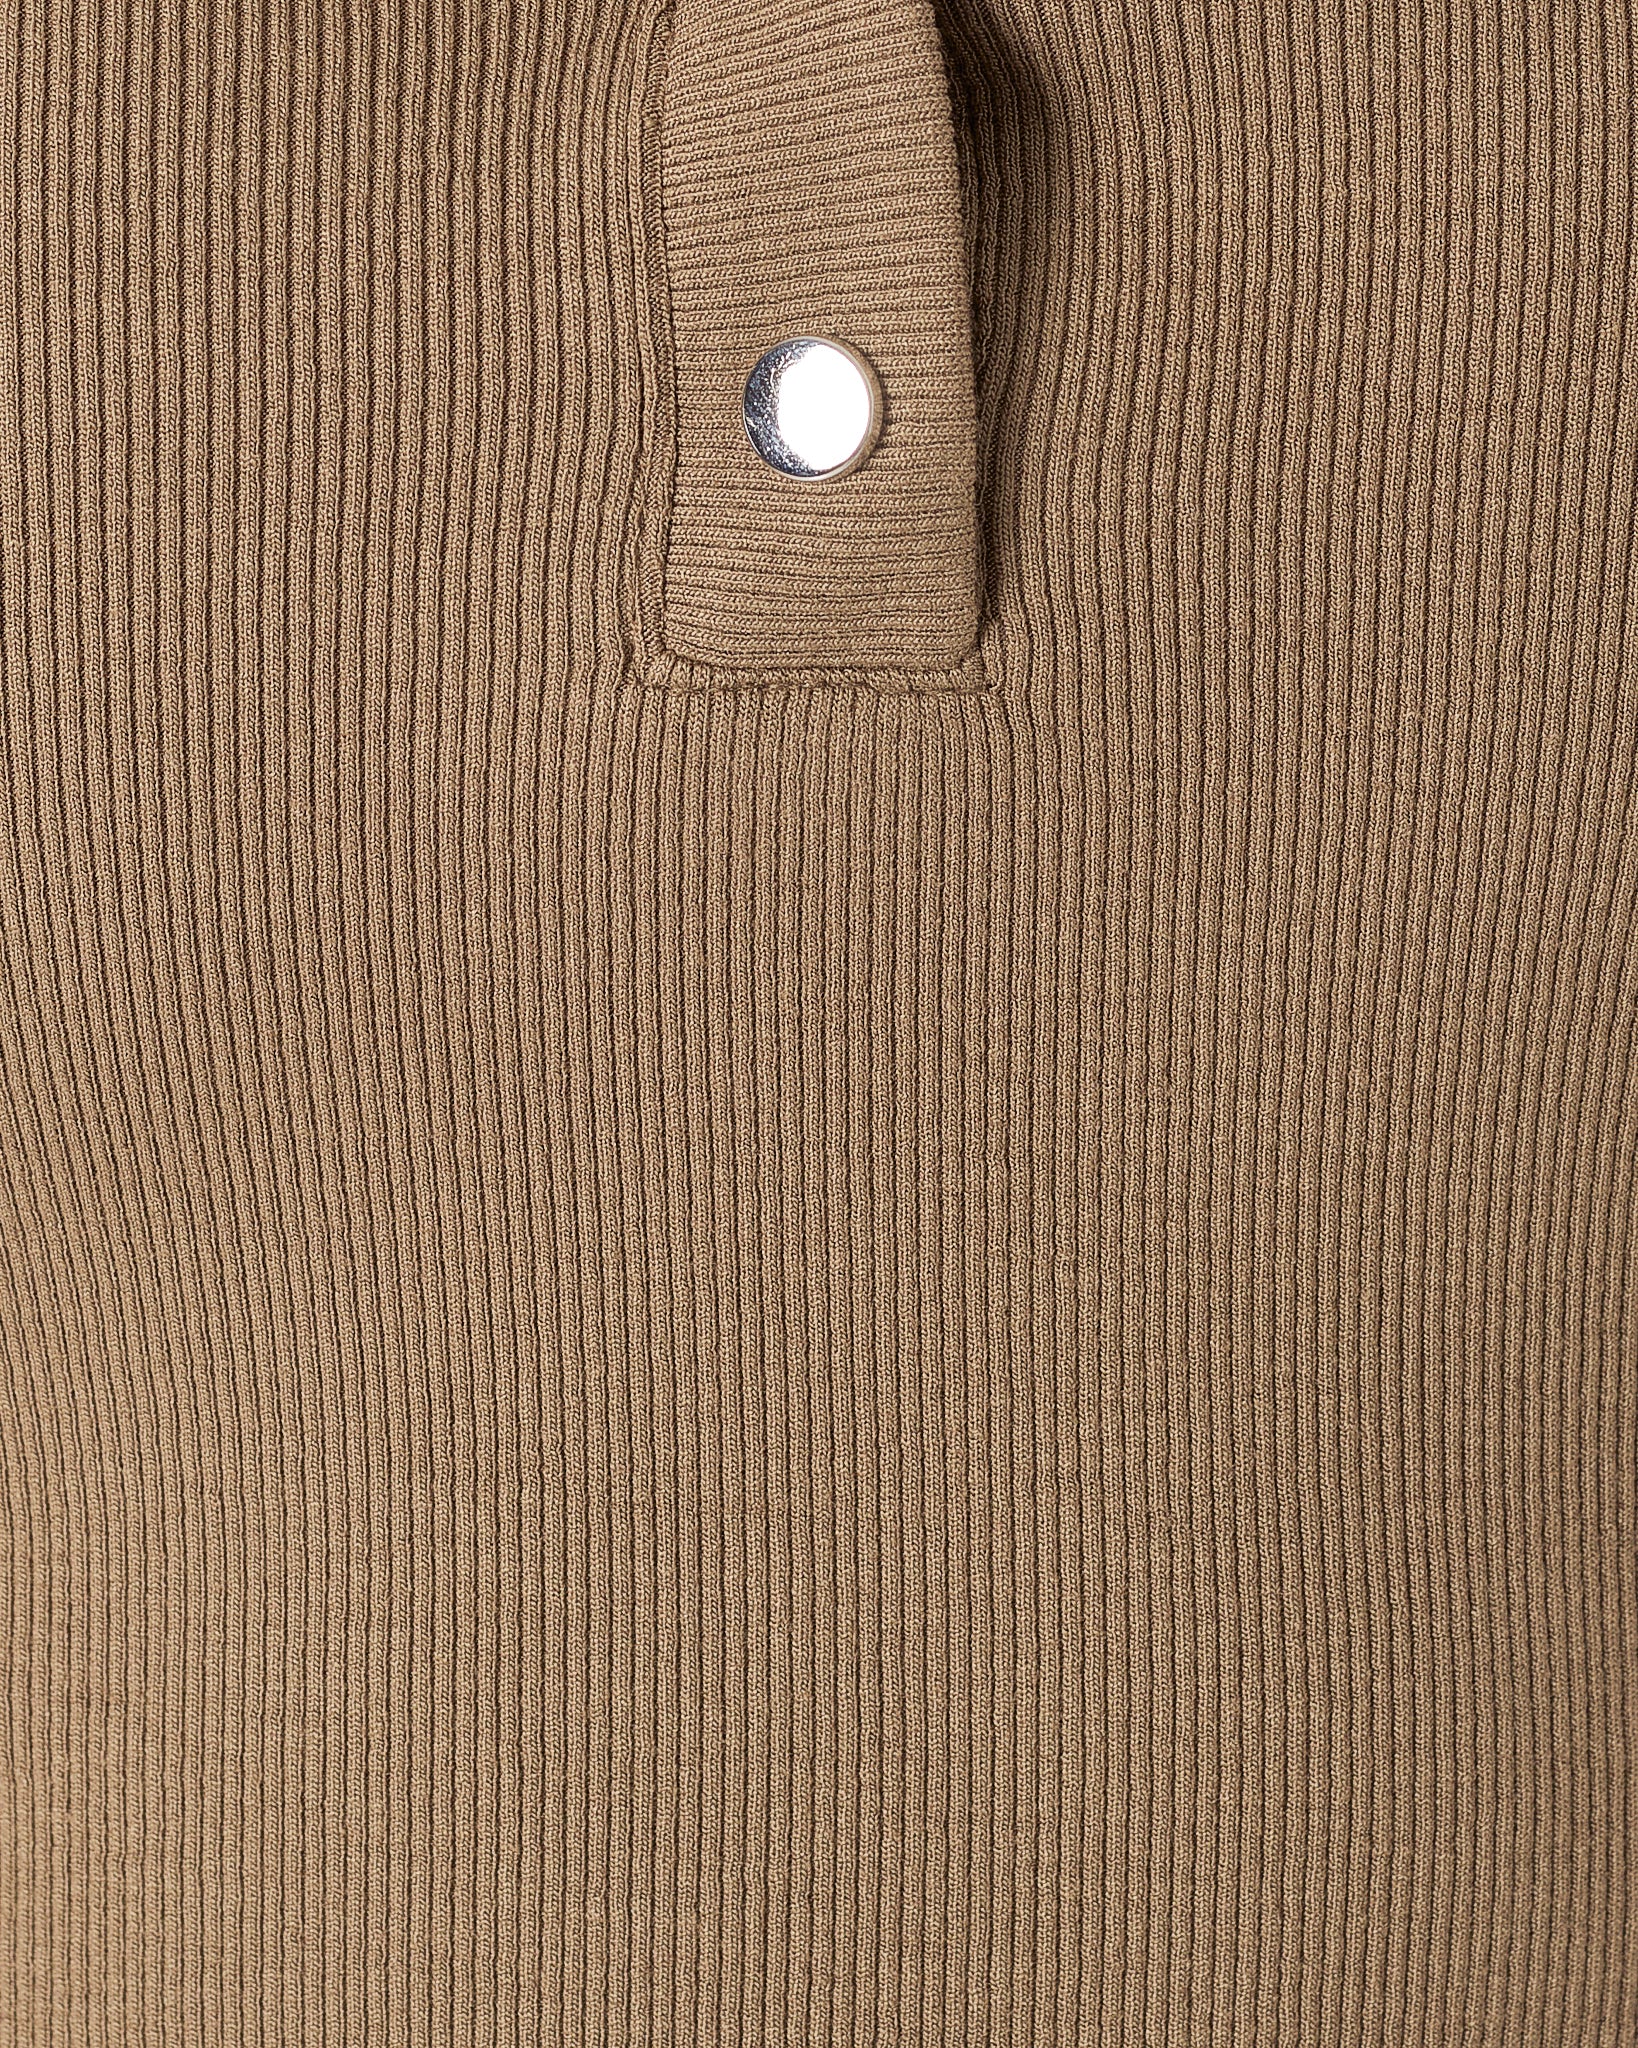 Lady V Neck Brown T-Shirt Long Sleeve 12.90